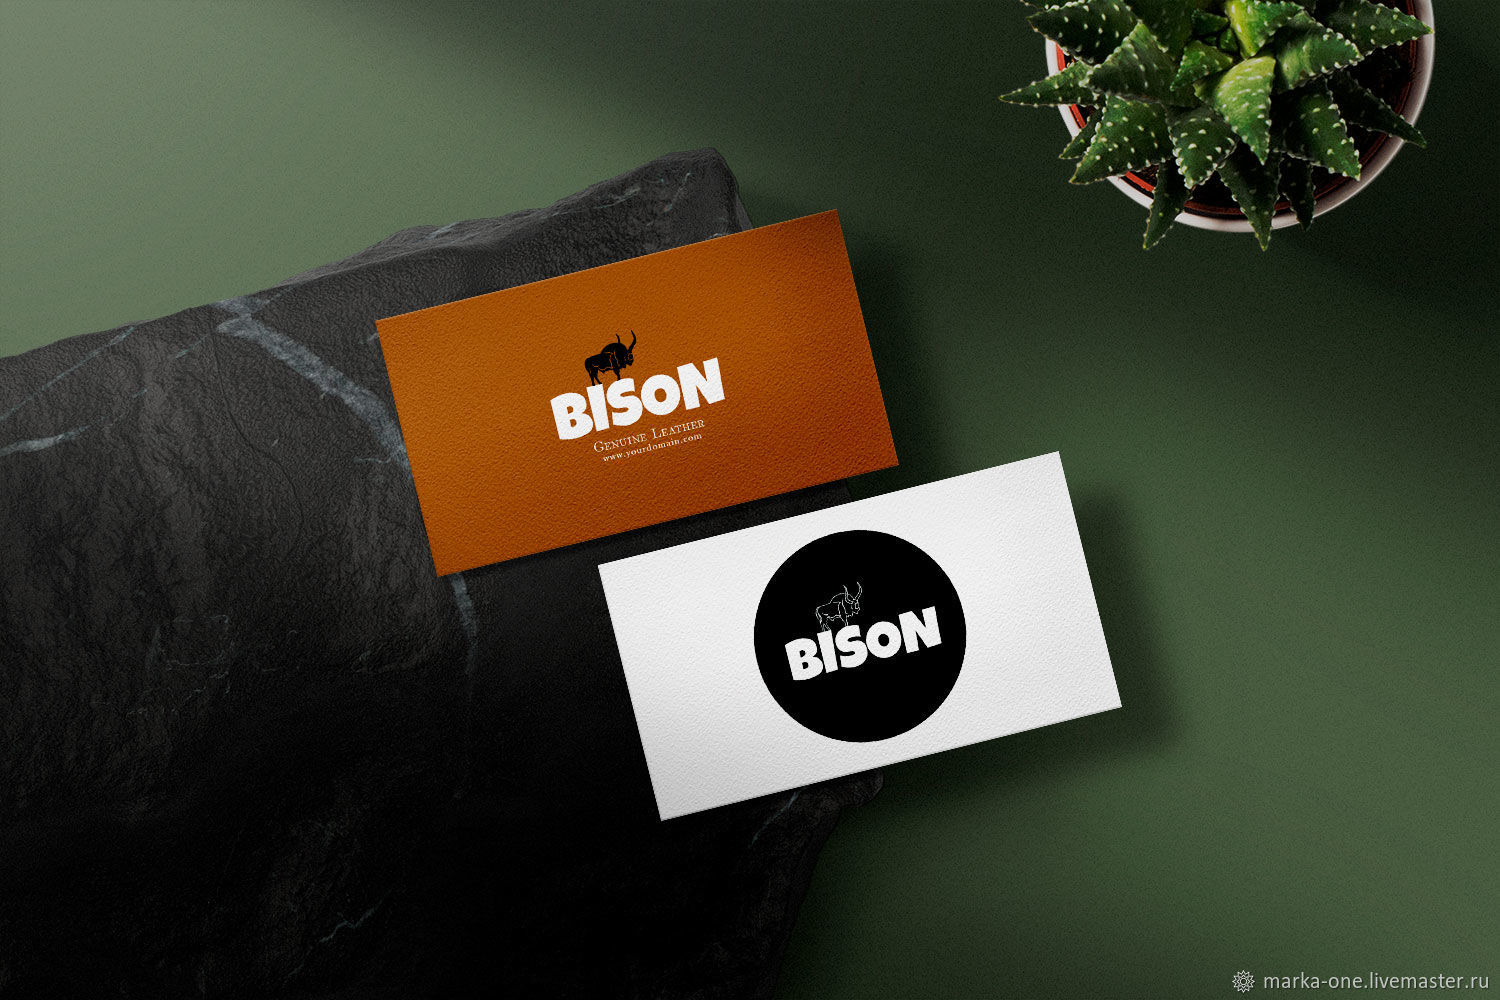 Заказать бизон. Бизон логотип. Бизон обувь логотип. Bizon365 логотип. Beezone логотип.